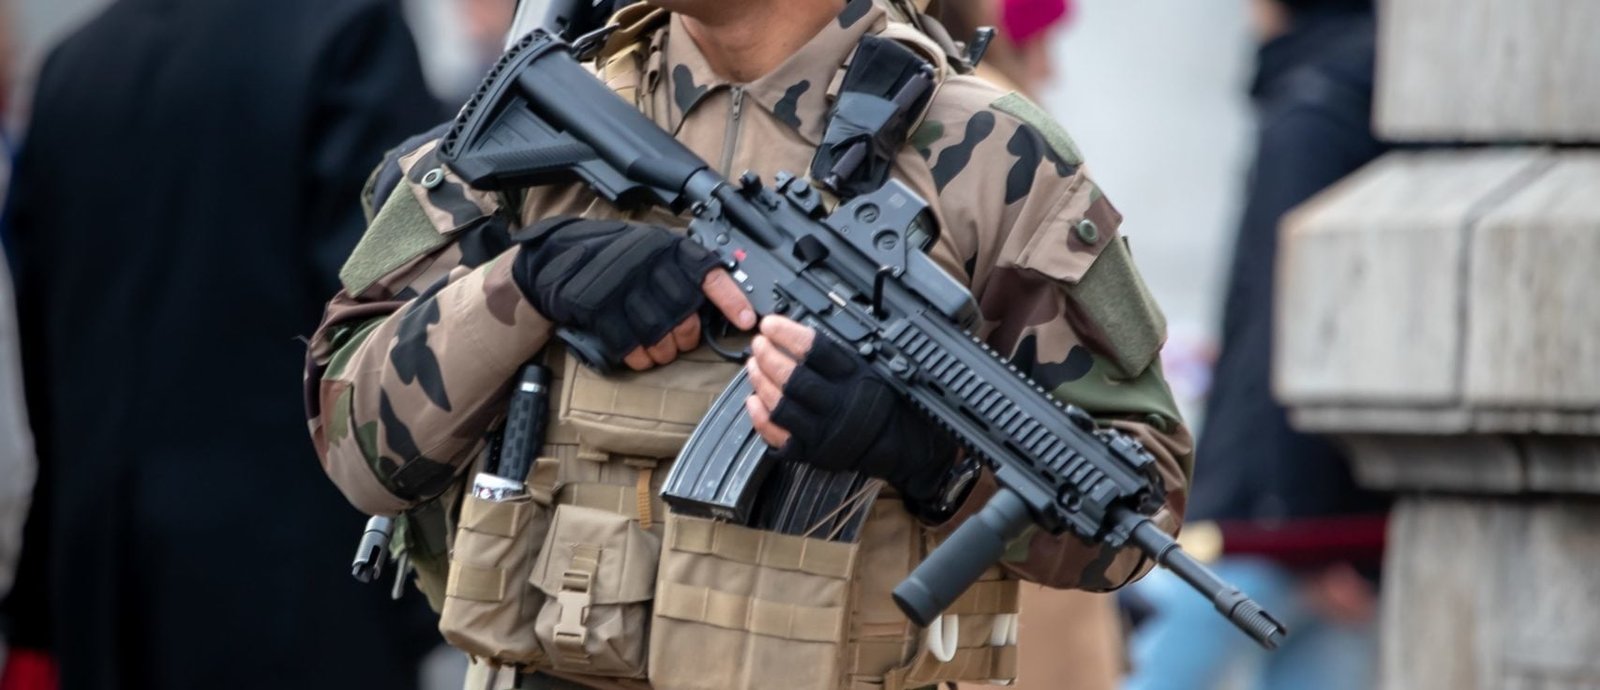 Legionnaire holding an HK-416 rifle